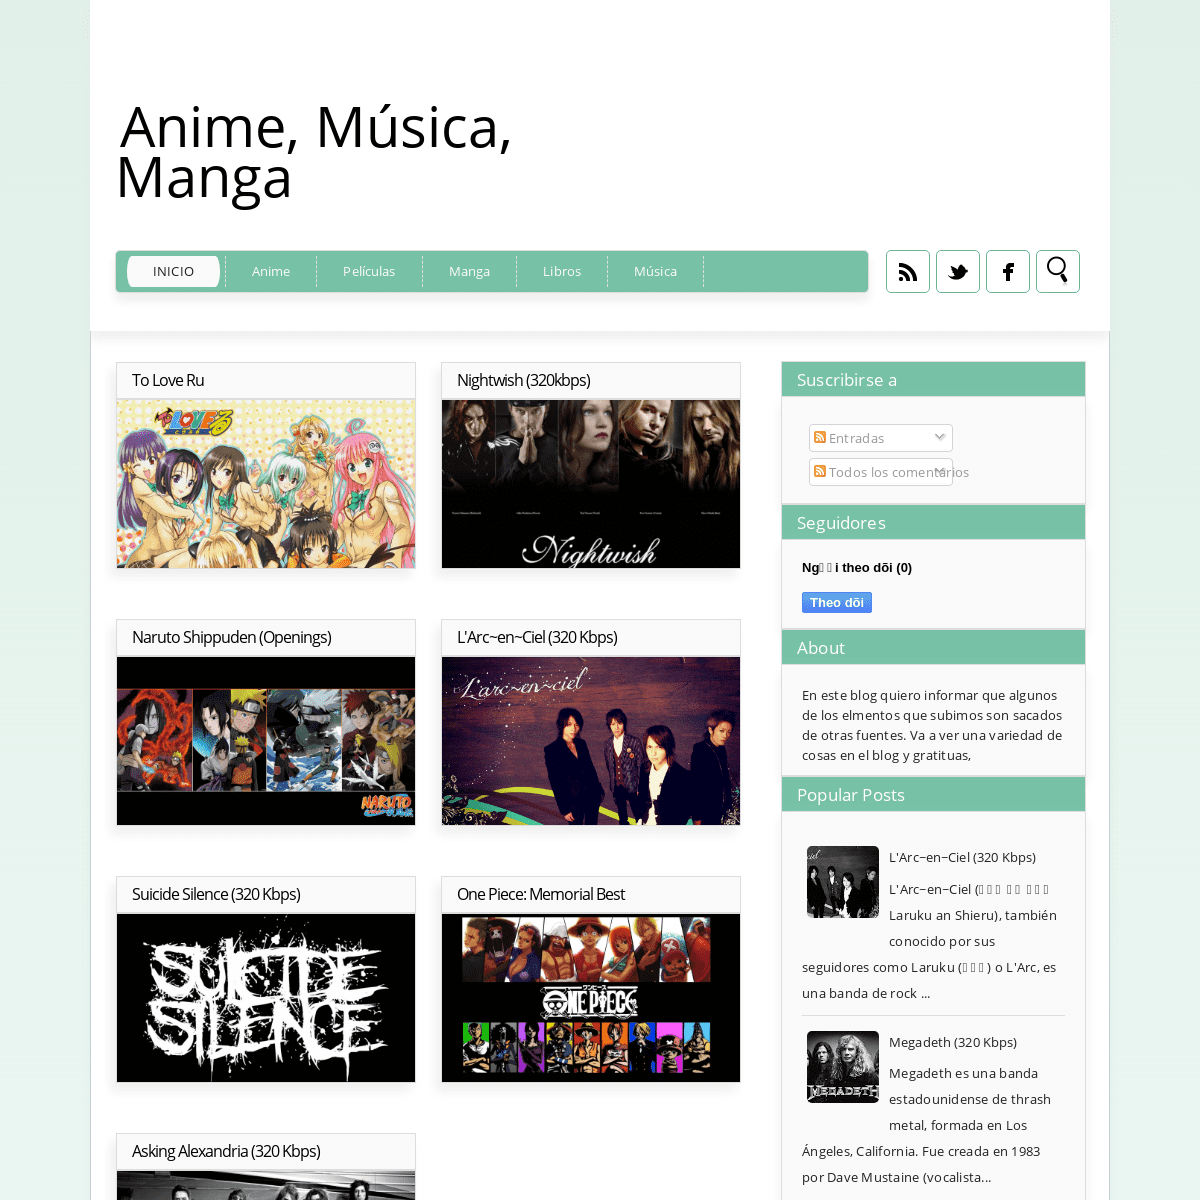 Anime, Música, Manga